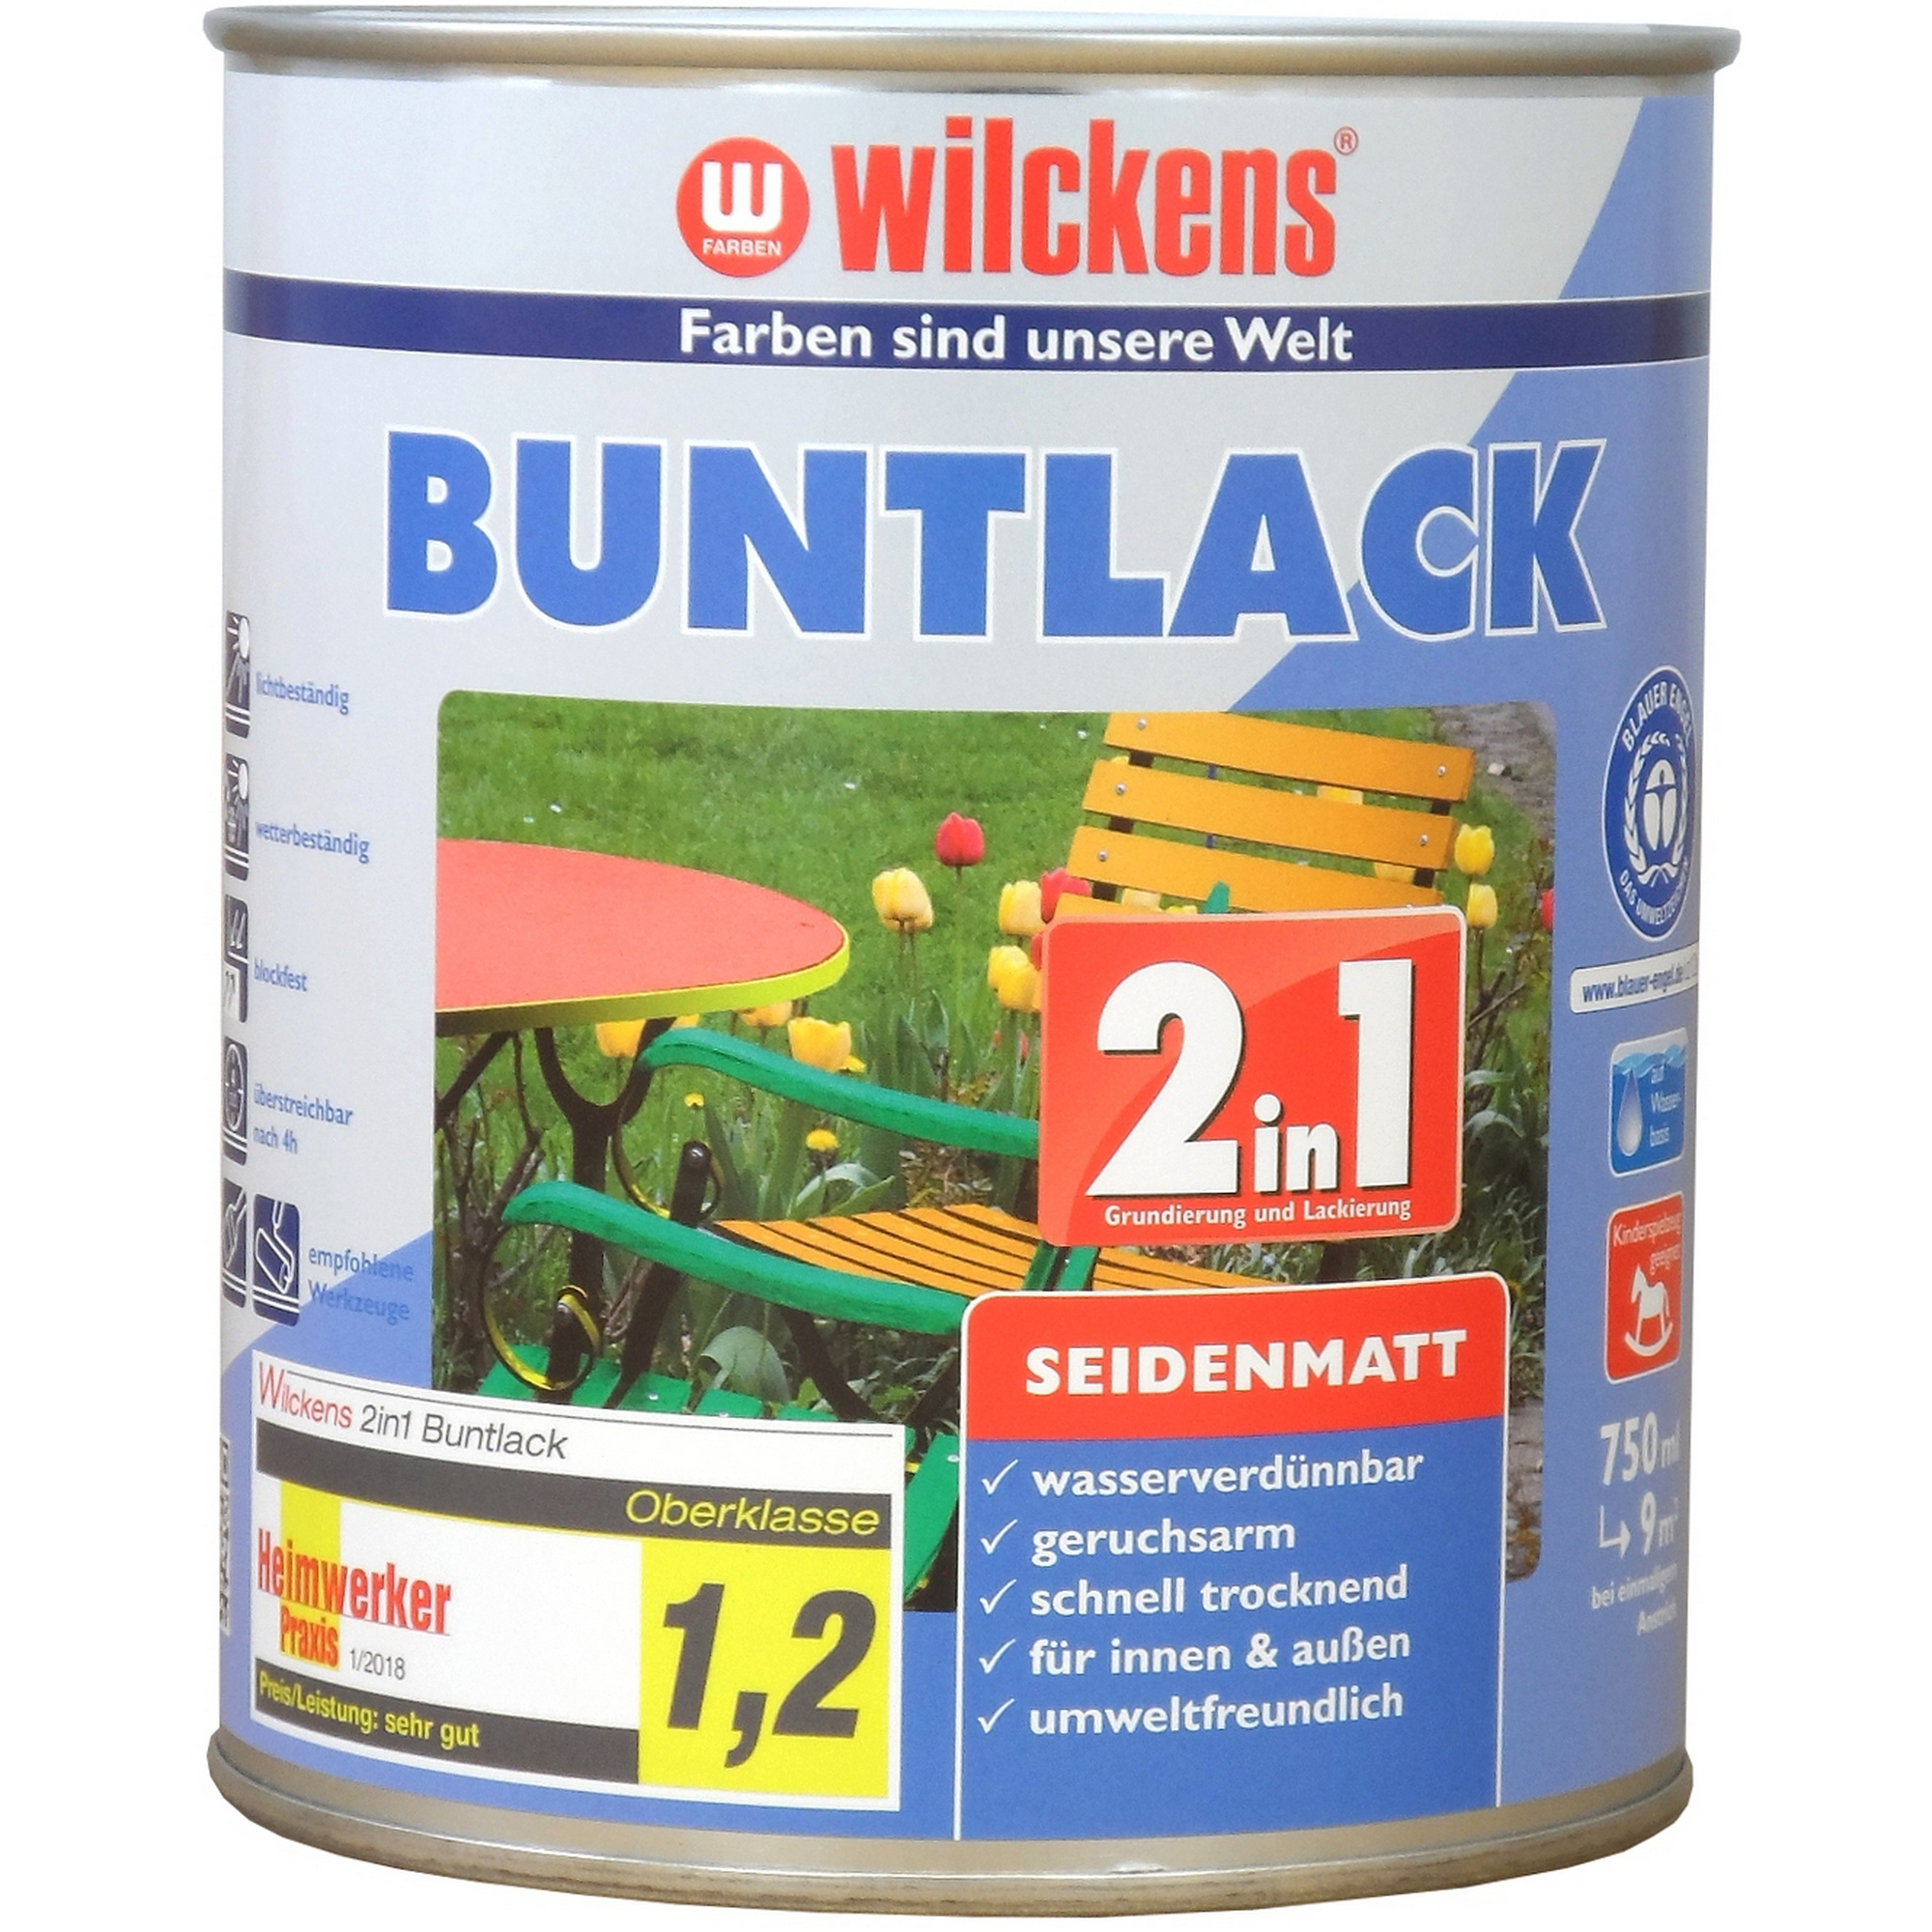 2in1 Buntlack hellelfenbein seidenmatt 750 ml + product picture